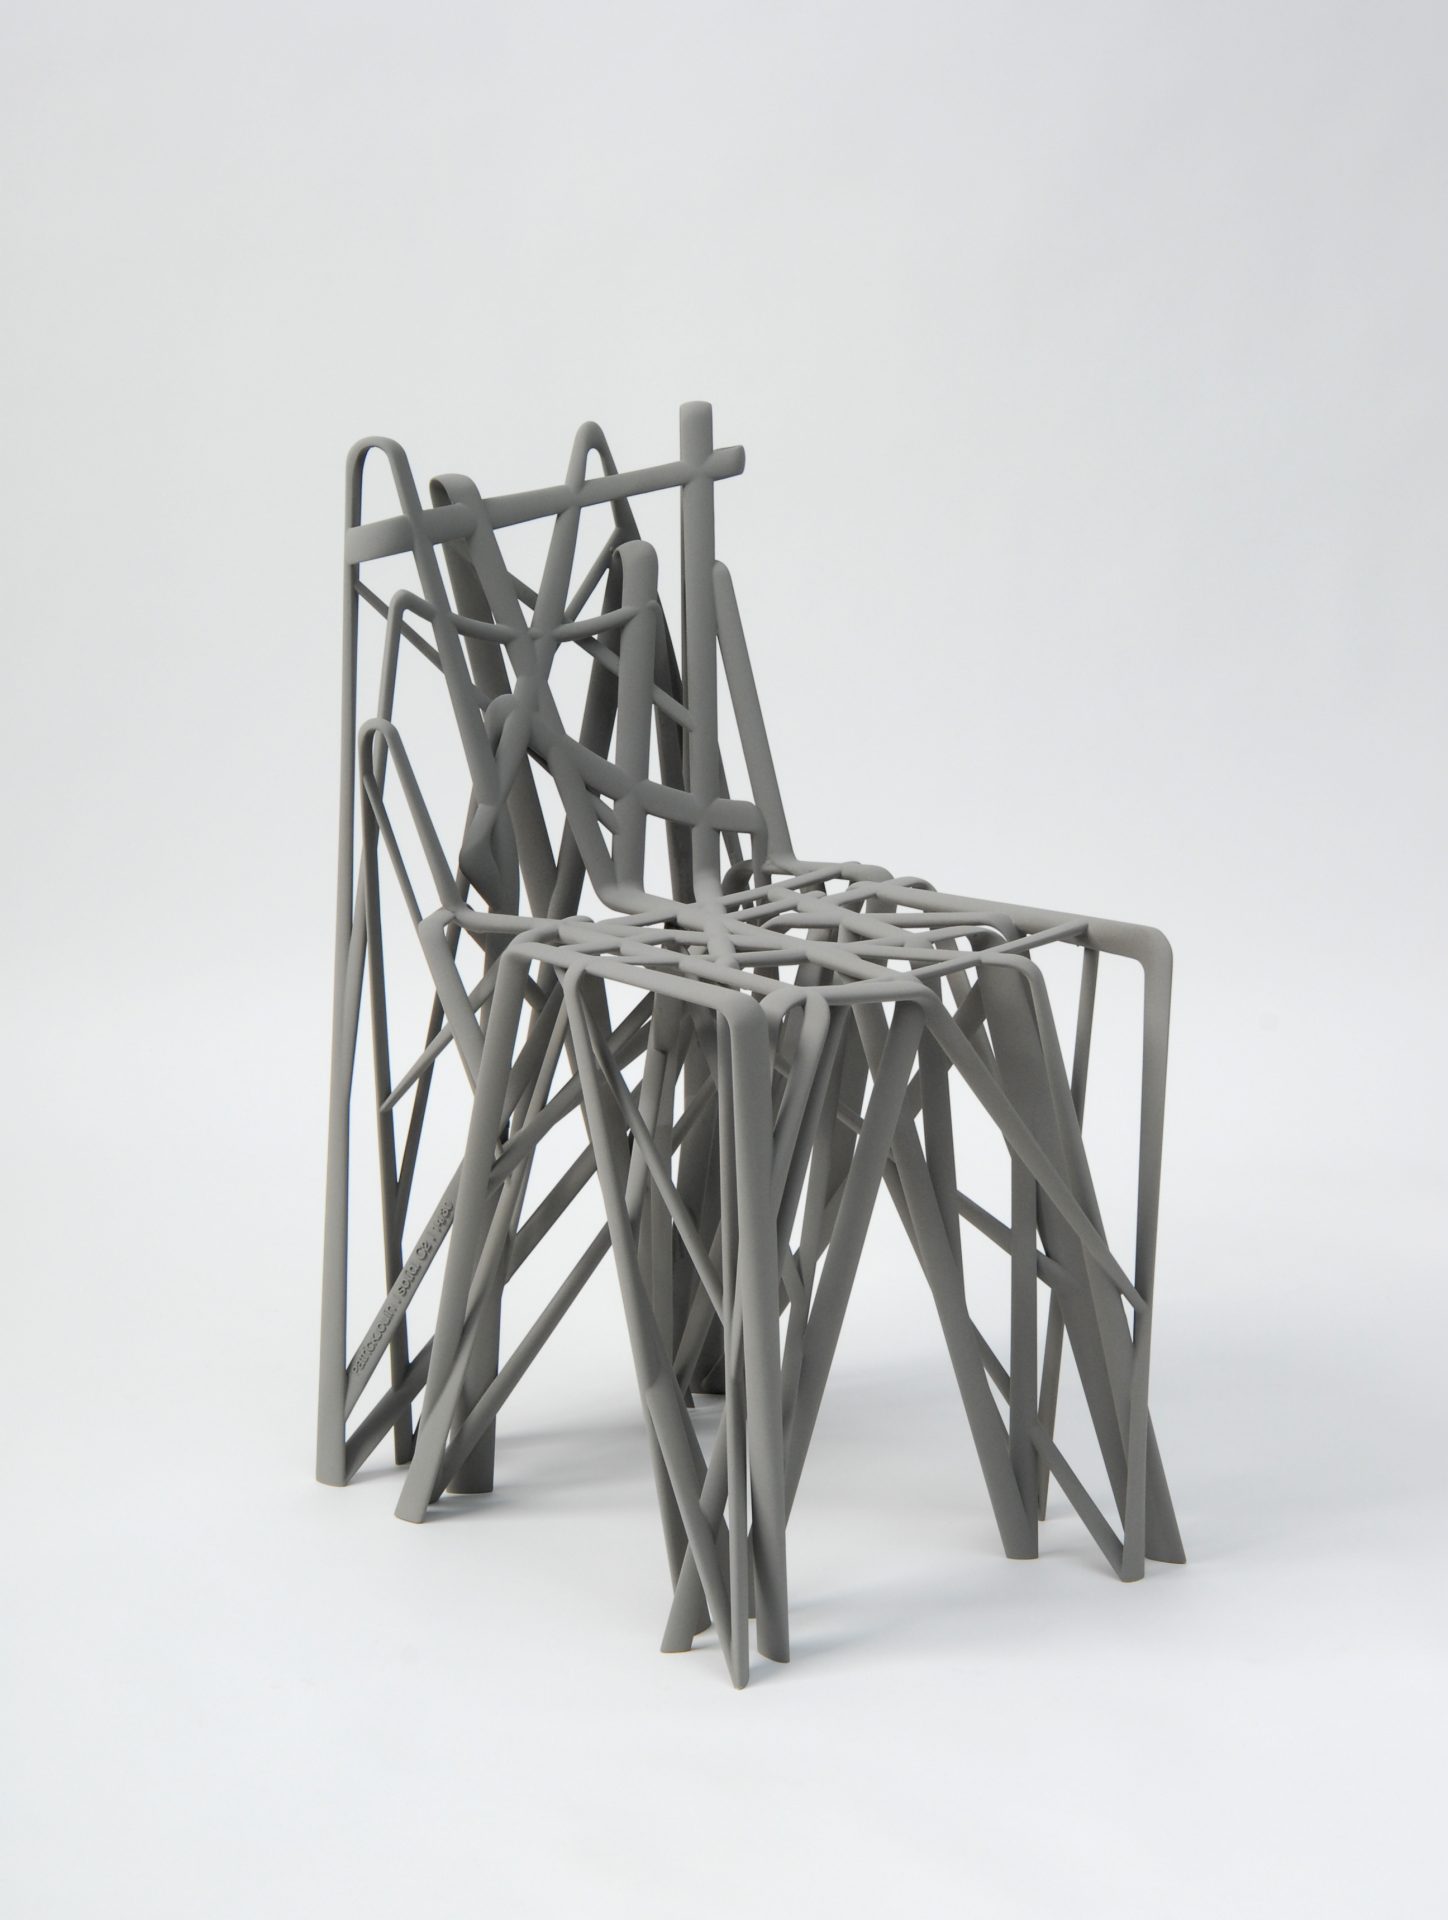 Three-quarter view of a 3D-printed chair